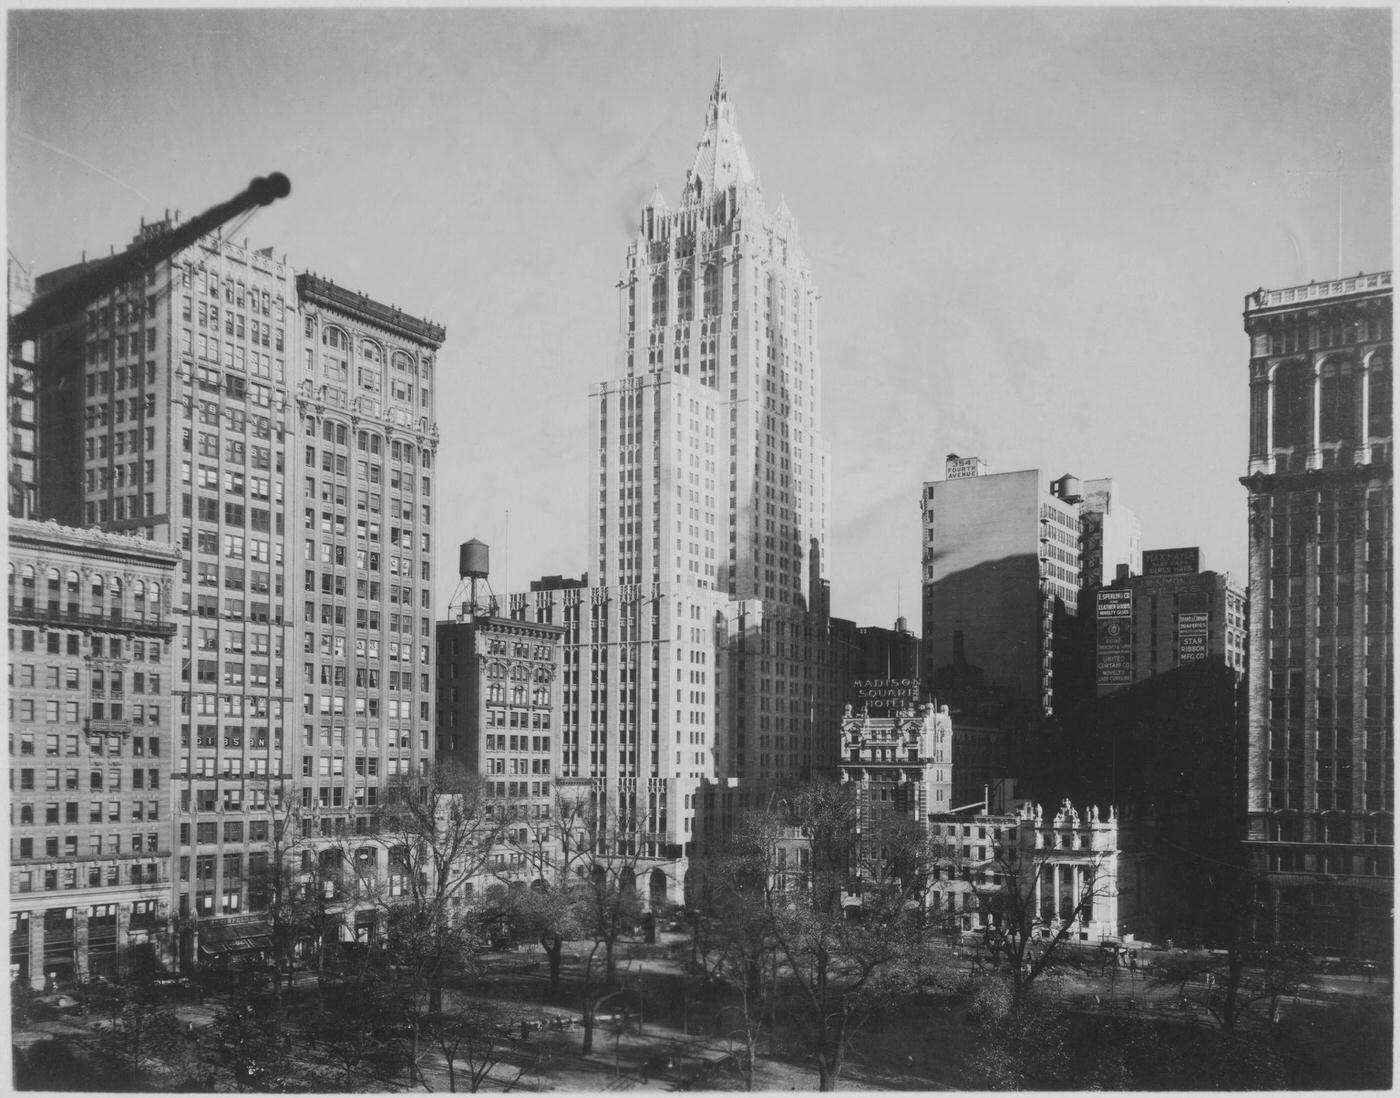 View Towards New York Life Insurance Company, 51 Madison Avenue, Manhattan, 1929